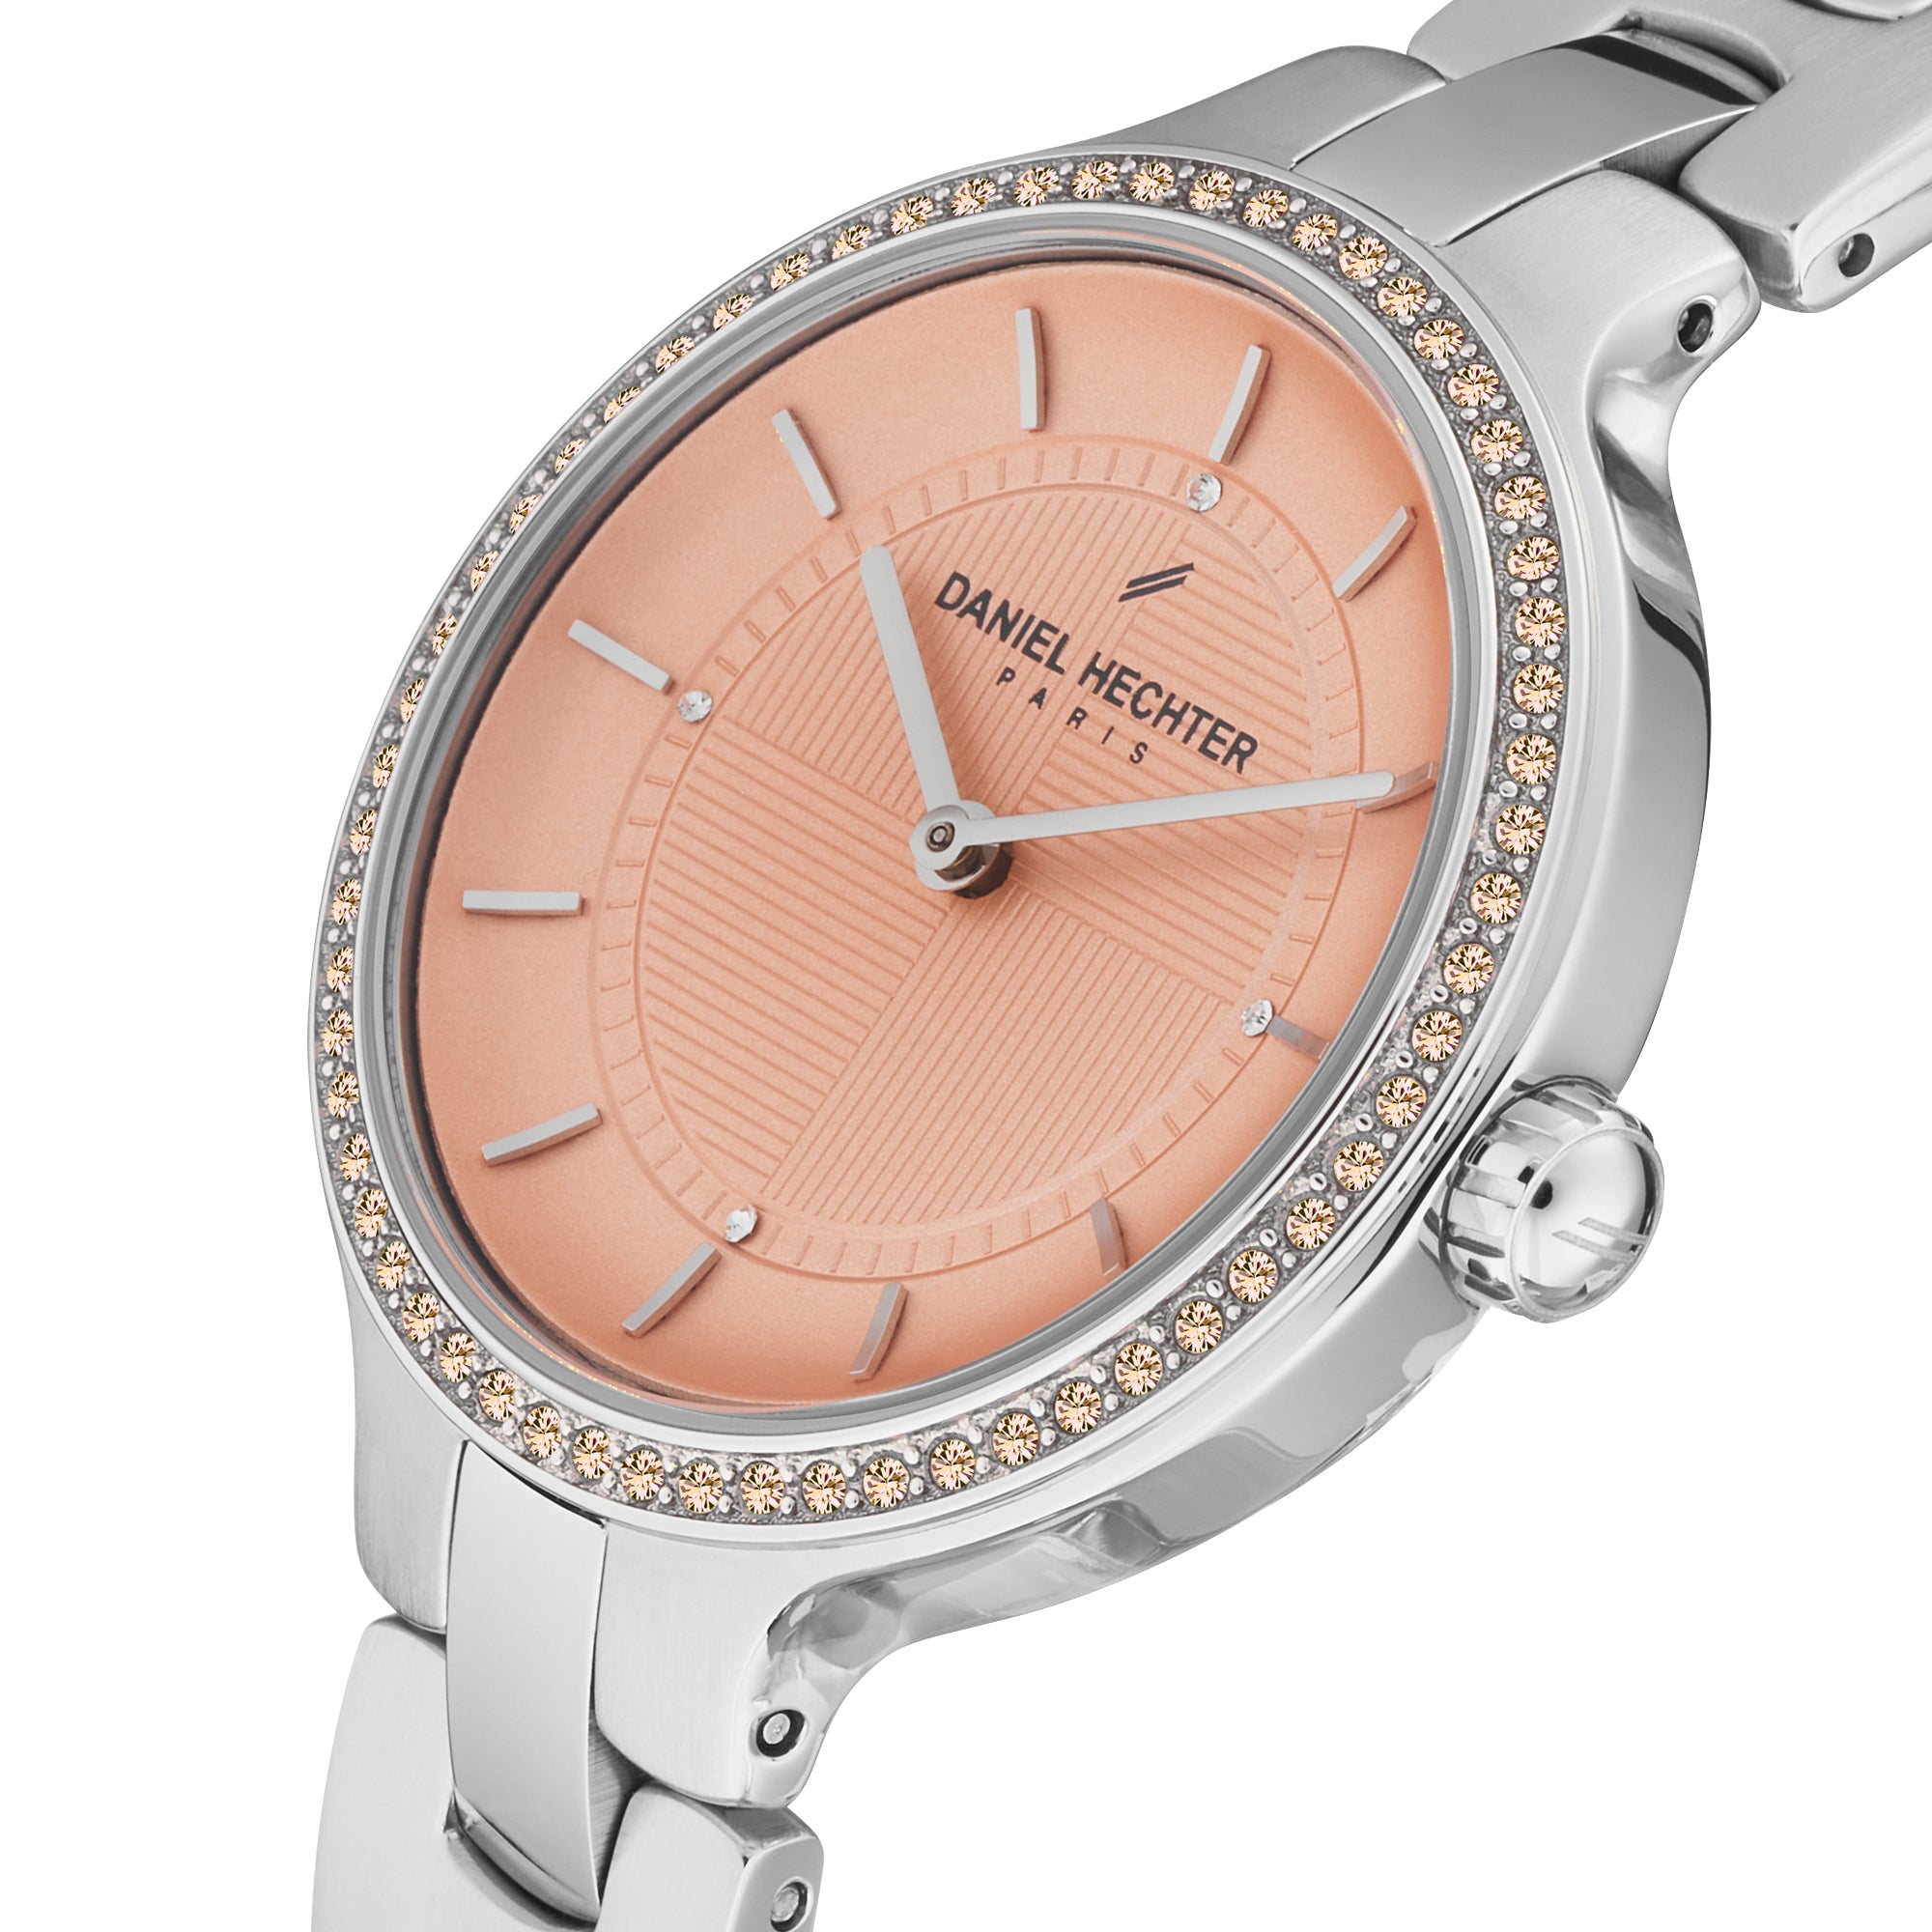 Buy Daniel Hechter Radiant Pink Champagne Watch Online